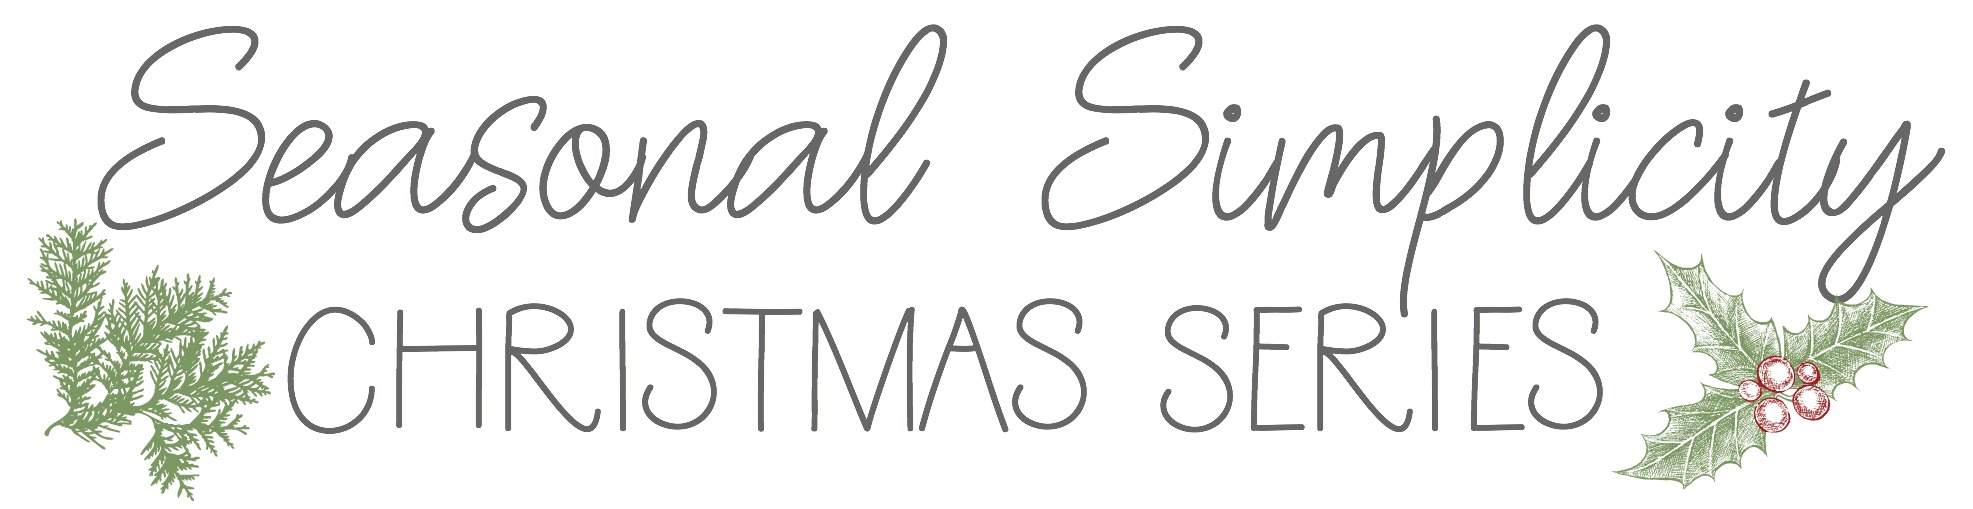 Seasonal simplicity Christmas series poster.